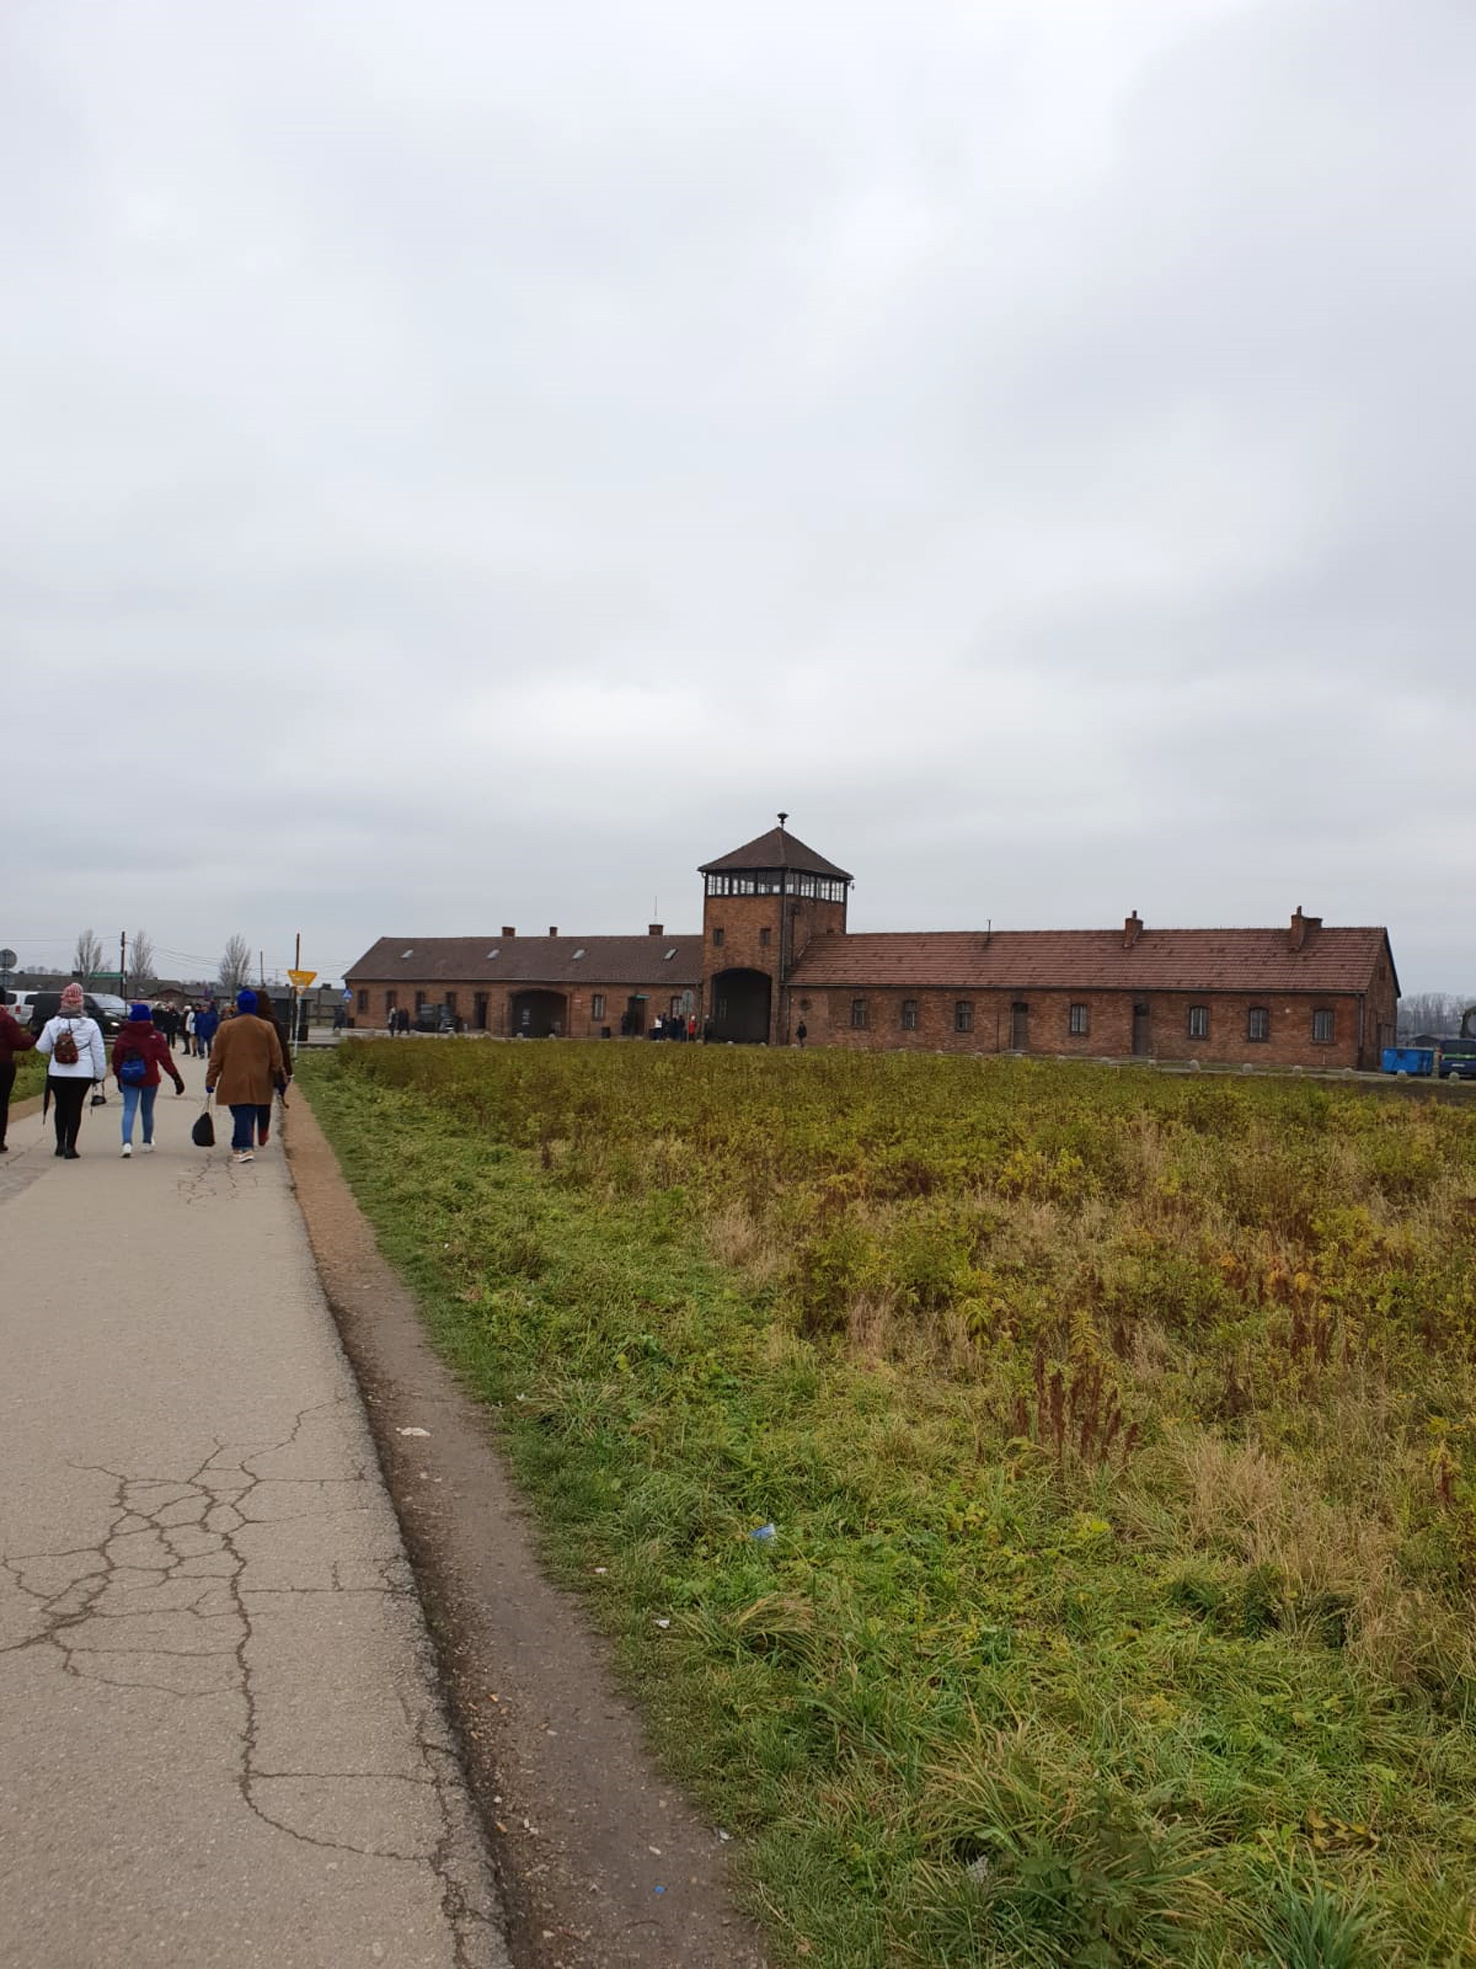 Walking towards the infamous gates of auschwitz